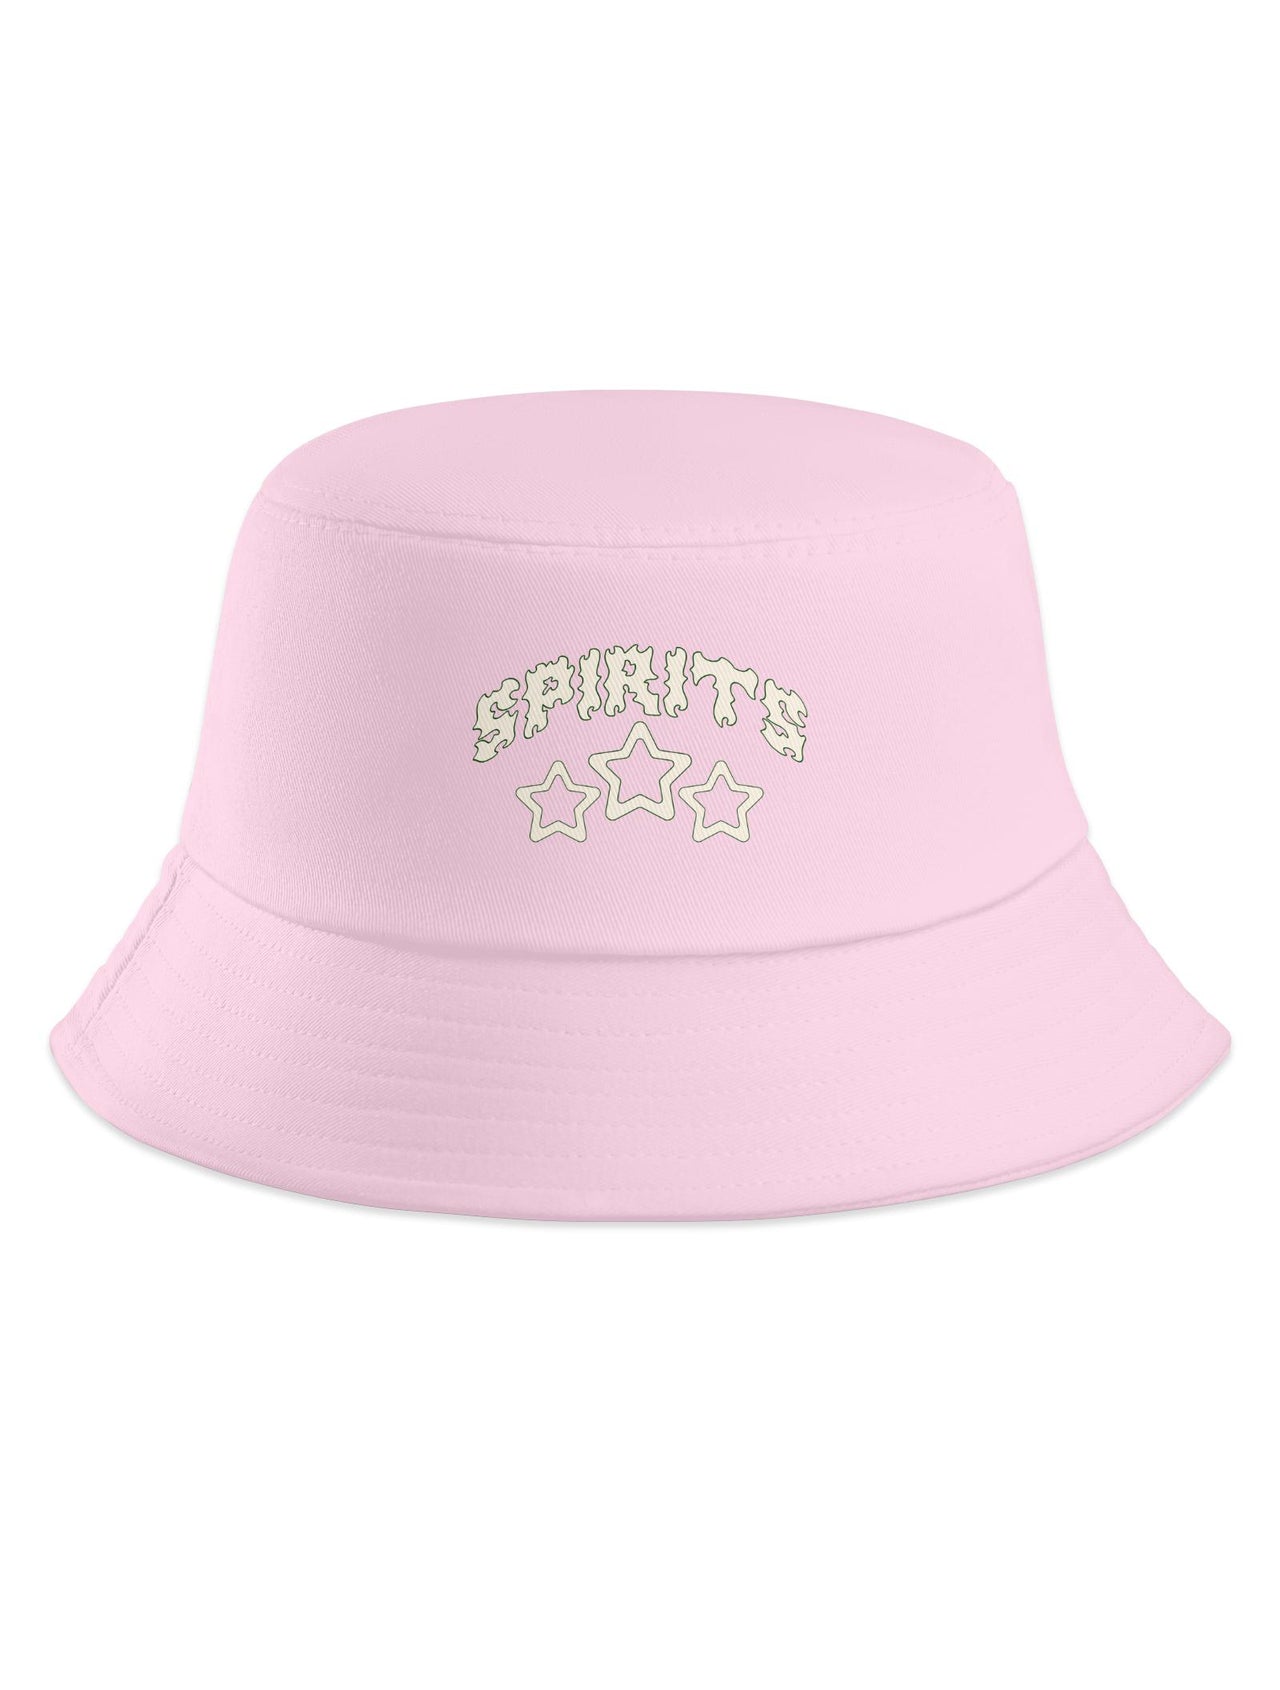 Spirits Bucket Hat Light Pink